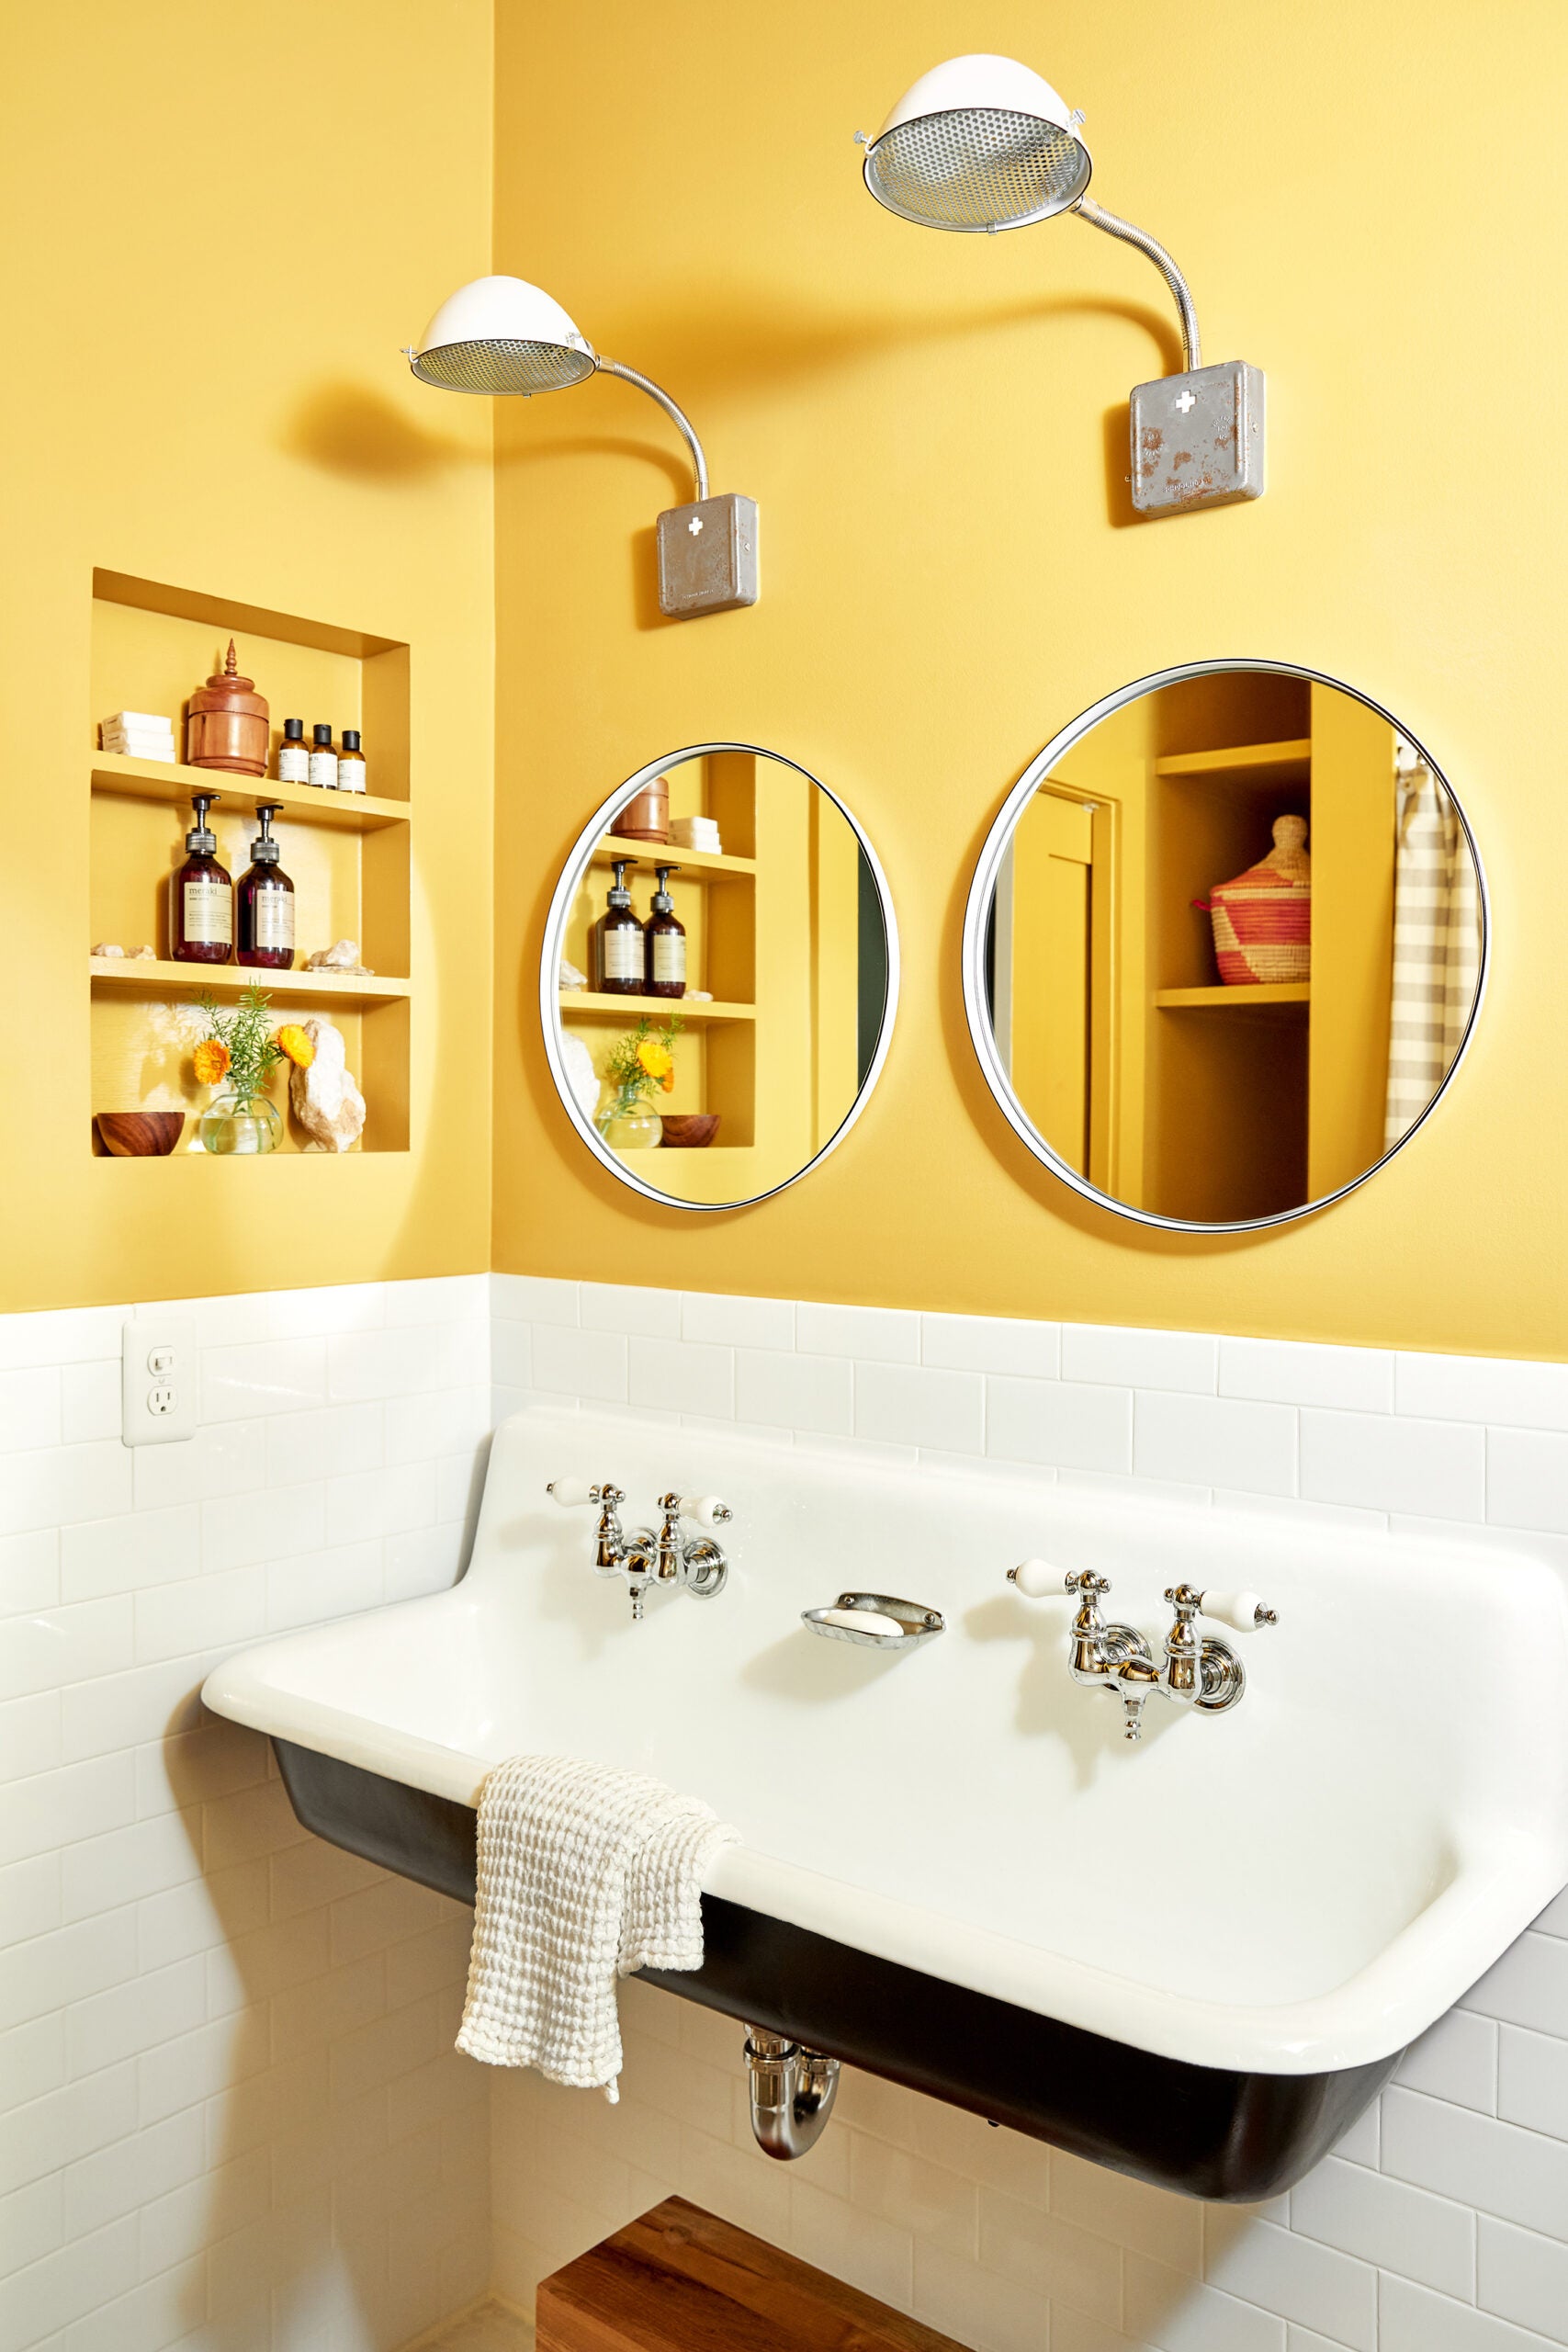 Farmhouse sink in yellow bathroom with white subway tile